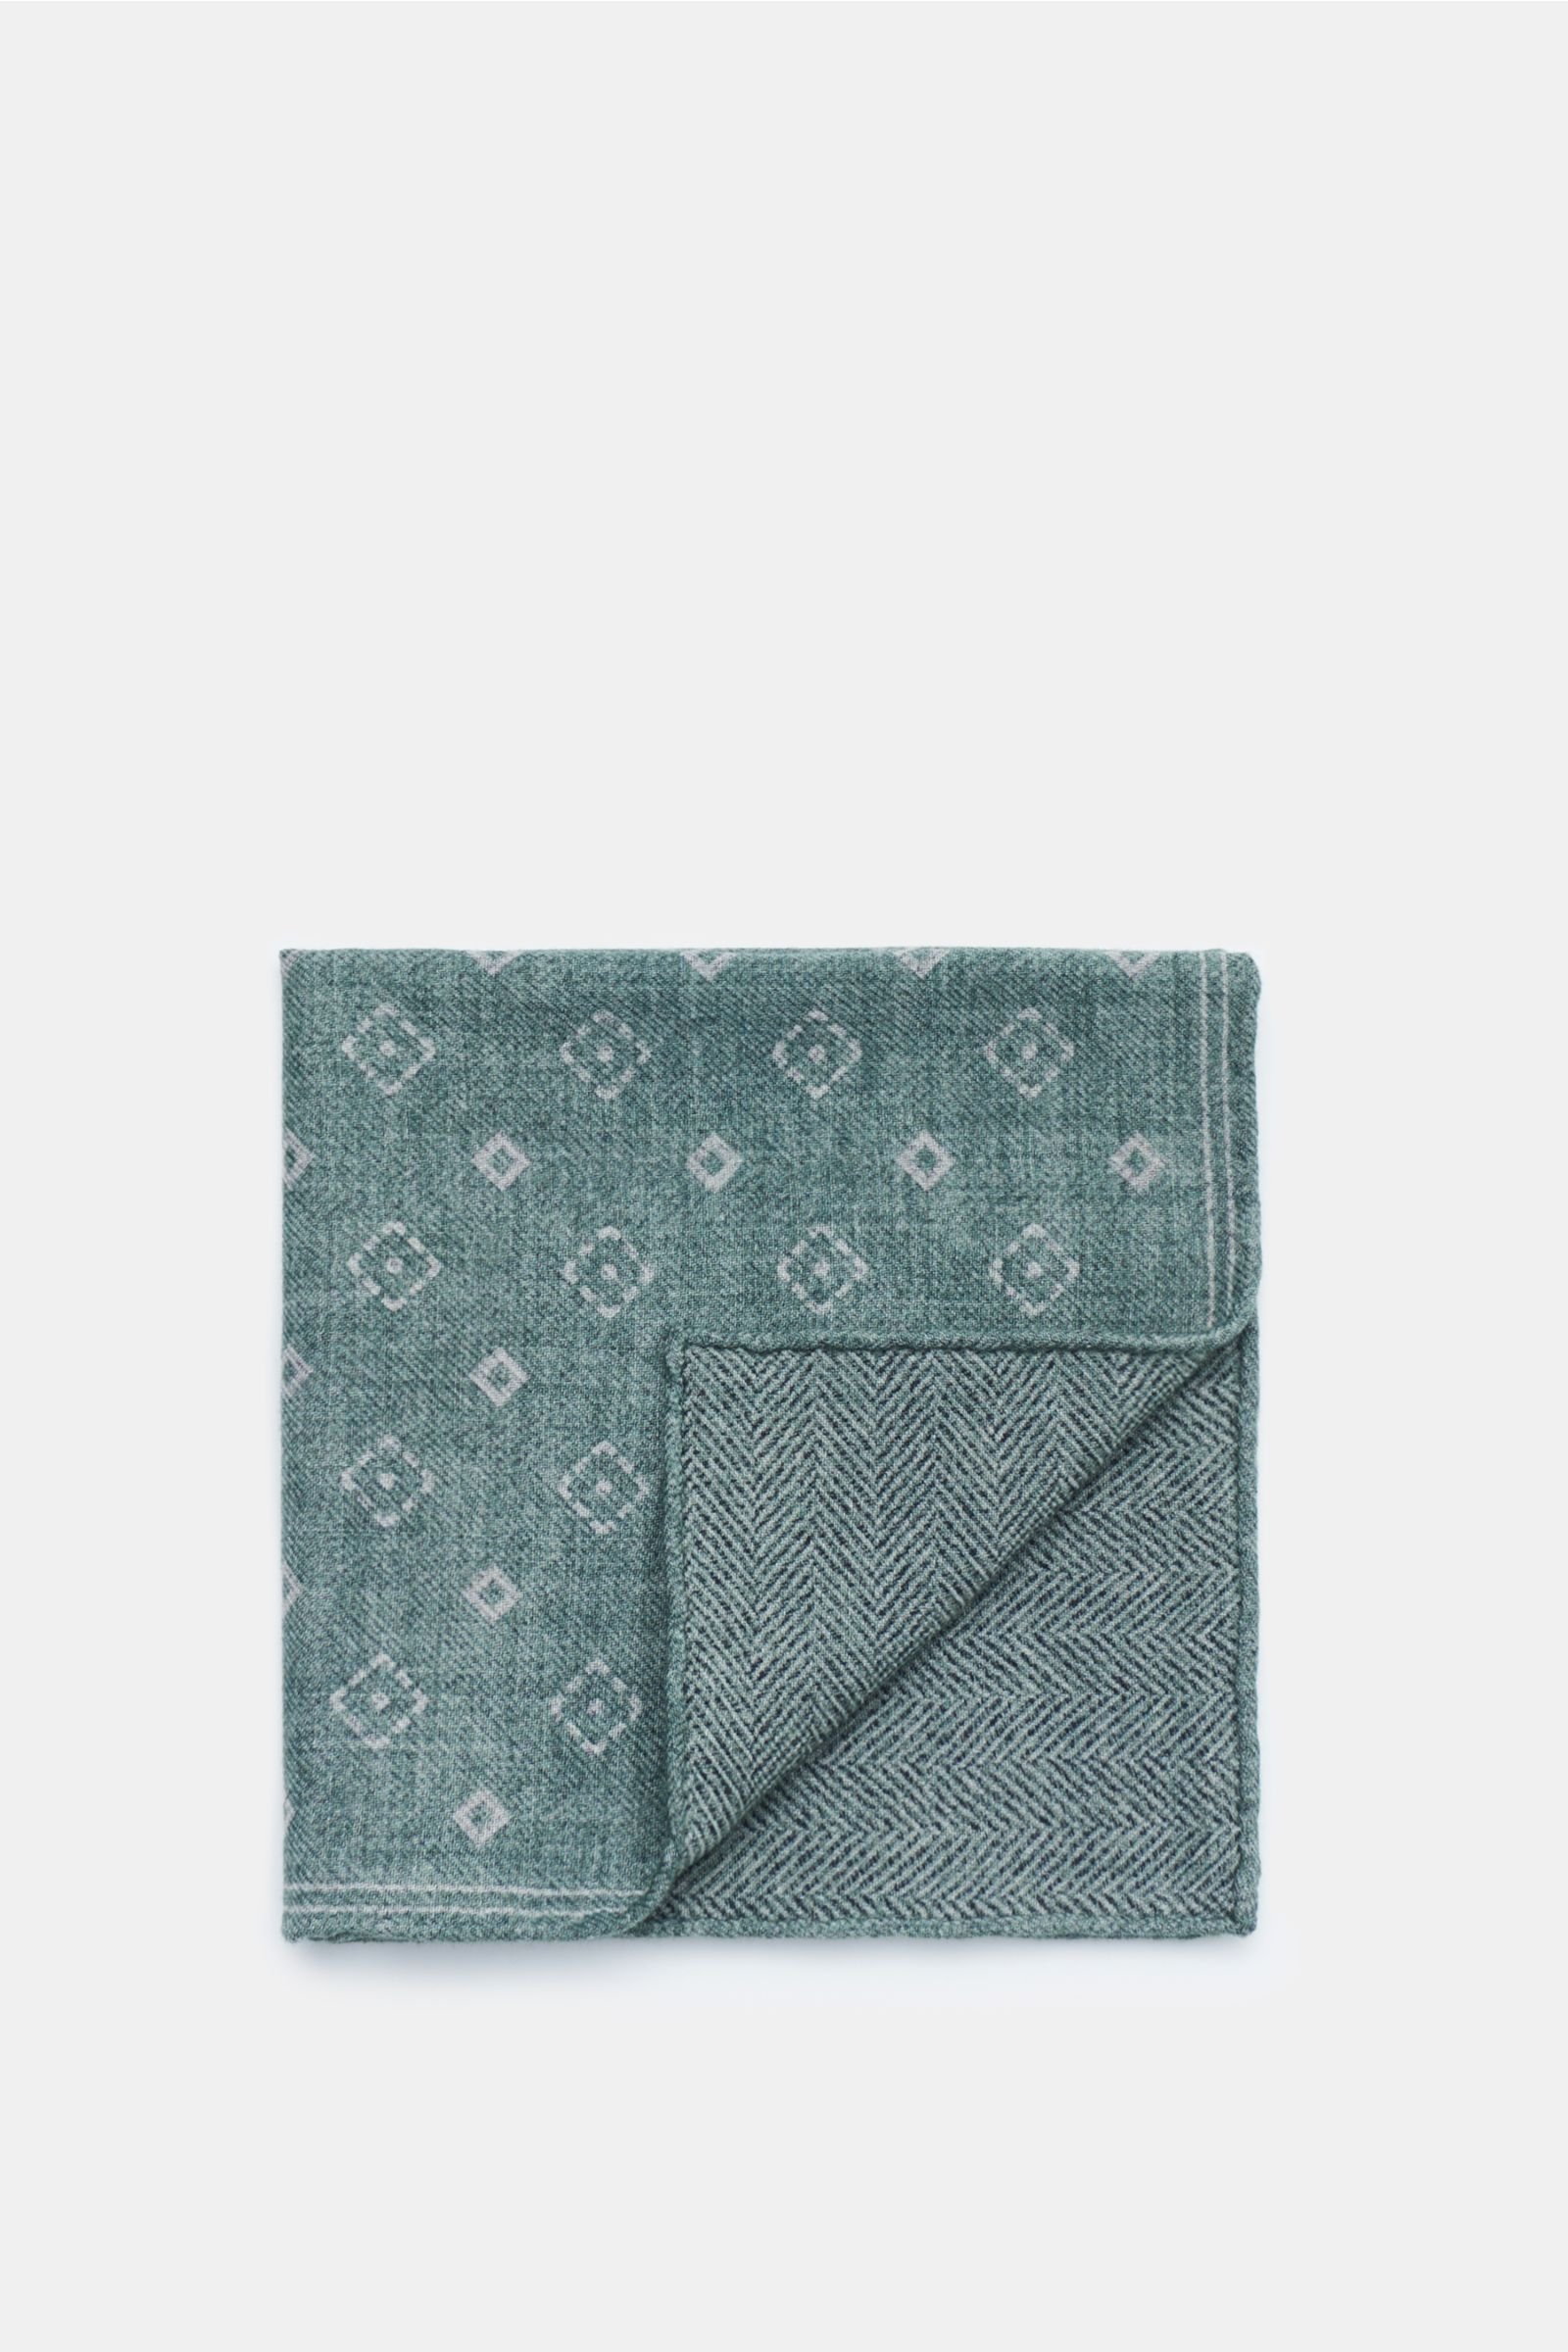 Pocket square grey green patterned